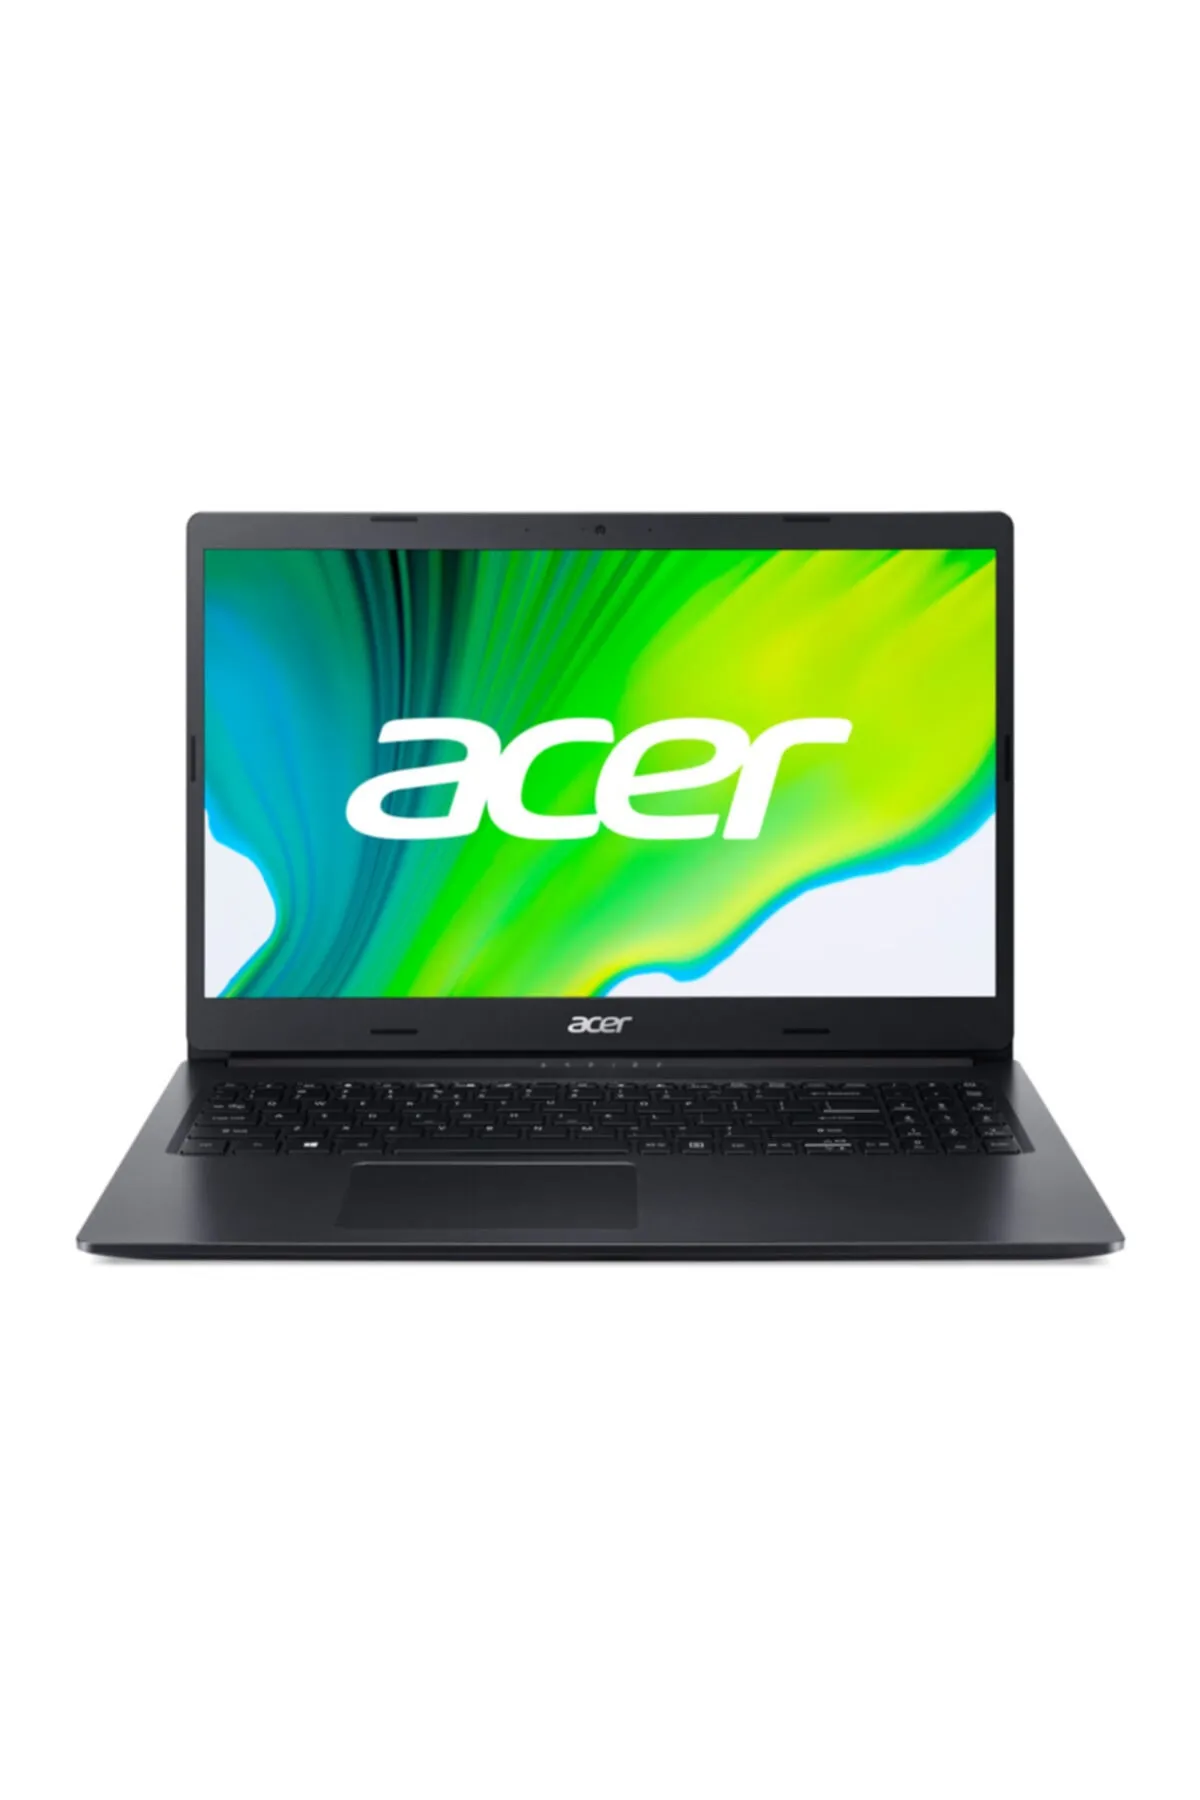 Acer Aspire 3 A317-51 Notebook